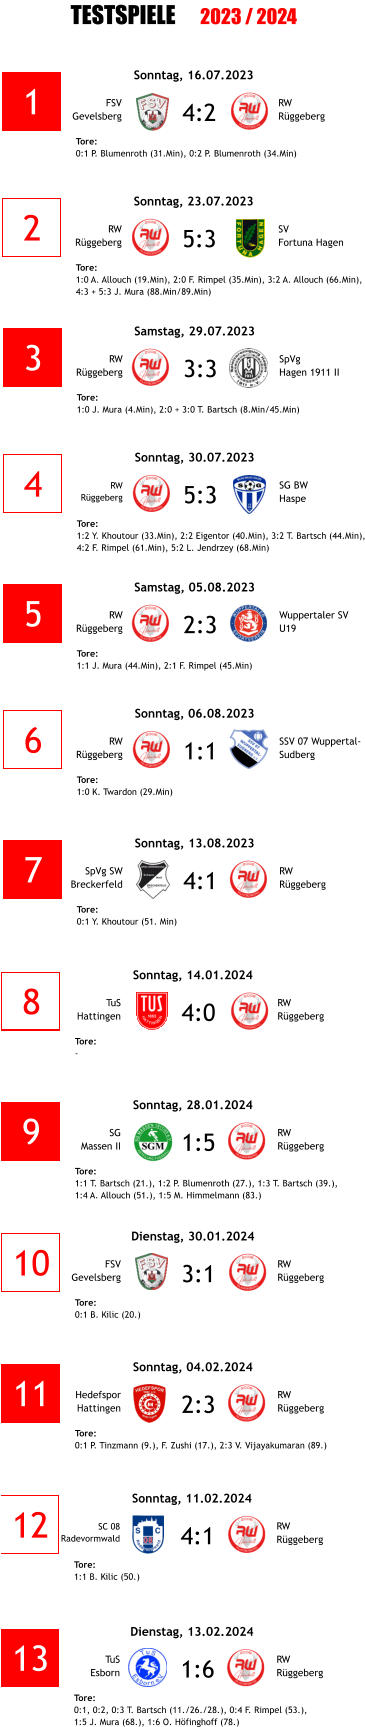 Tore: 0:1, 0:2, 0:3 T. Bartsch (11./26./28.), 0:4 F. Rimpel (53.), 1:5 J. Mura (68.), 1:6 O. Höfinghoff (78.) RW Rüggeberg 1:6 TuS Esborn Dienstag, 13.02.2024 13 Tore: 1:1 B. Kilic (50.) RW Rüggeberg 4:1 SC 08 Radevormwald Sonntag, 11.02.2024 12 Tore: 0:1 P. Tinzmann (9.), F. Zushi (17.), 2:3 V. Vijayakumaran (89.) RW Rüggeberg 2:3 Hedefspor Hattingen Sonntag, 04.02.2024 11 Tore: 0:1 B. Kilic (20.) RW Rüggeberg 3:1 FSV Gevelsberg Dienstag, 30.01.2024 10 Tore: 1:1 T. Bartsch (21.), 1:2 P. Blumenroth (27.), 1:3 T. Bartsch (39.), 1:4 A. Allouch (51.), 1:5 M. Himmelmann (83.) RW Rüggeberg 1:5 SG Massen II Sonntag, 28.01.2024 9 Tore: - RW Rüggeberg 4:0 TuS Hattingen Sonntag, 14.01.2024 8 Tore: 0:1 Y. Khoutour (51. Min) RW Rüggeberg 4:1 SpVg SW Breckerfeld Sonntag, 13.08.2023 7 Tore: 1:0 K. Twardon (29.Min) SSV 07 Wuppertal- Sudberg 1:1 RW Rüggeberg Sonntag, 06.08.2023 6 Tore: 1:1 J. Mura (44.Min), 2:1 F. Rimpel (45.Min) Wuppertaler SV U19 2:3 RW Rüggeberg Samstag, 05.08.2023 5 Tore: 1:2 Y. Khoutour (33.Min), 2:2 Eigentor (40.Min), 3:2 T. Bartsch (44.Min), 4:2 F. Rimpel (61.Min), 5:2 L. Jendrzey (68.Min) SG BW Haspe 5:3 RW Rüggeberg Sonntag, 30.07.2023 4 Tore: 1:0 J. Mura (4.Min), 2:0 + 3:0 T. Bartsch (8.Min/45.Min) SpVg  Hagen 1911 II 3:3 RW Rüggeberg Samstag, 29.07.2023 3 Tore: 1:0 A. Allouch (19.Min), 2:0 F. Rimpel (35.Min), 3:2 A. Allouch (66.Min), 4:3 + 5:3 J. Mura (88.Min/89.Min) SV Fortuna Hagen 5:3 RW Rüggeberg Sonntag, 23.07.2023 2 Tore: 0:1 P. Blumenroth (31.Min), 0:2 P. Blumenroth (34.Min) RW Rüggeberg 4:2 FSV Gevelsberg Sonntag, 16.07.2023 1 TESTSPIELE  2023 / 2024